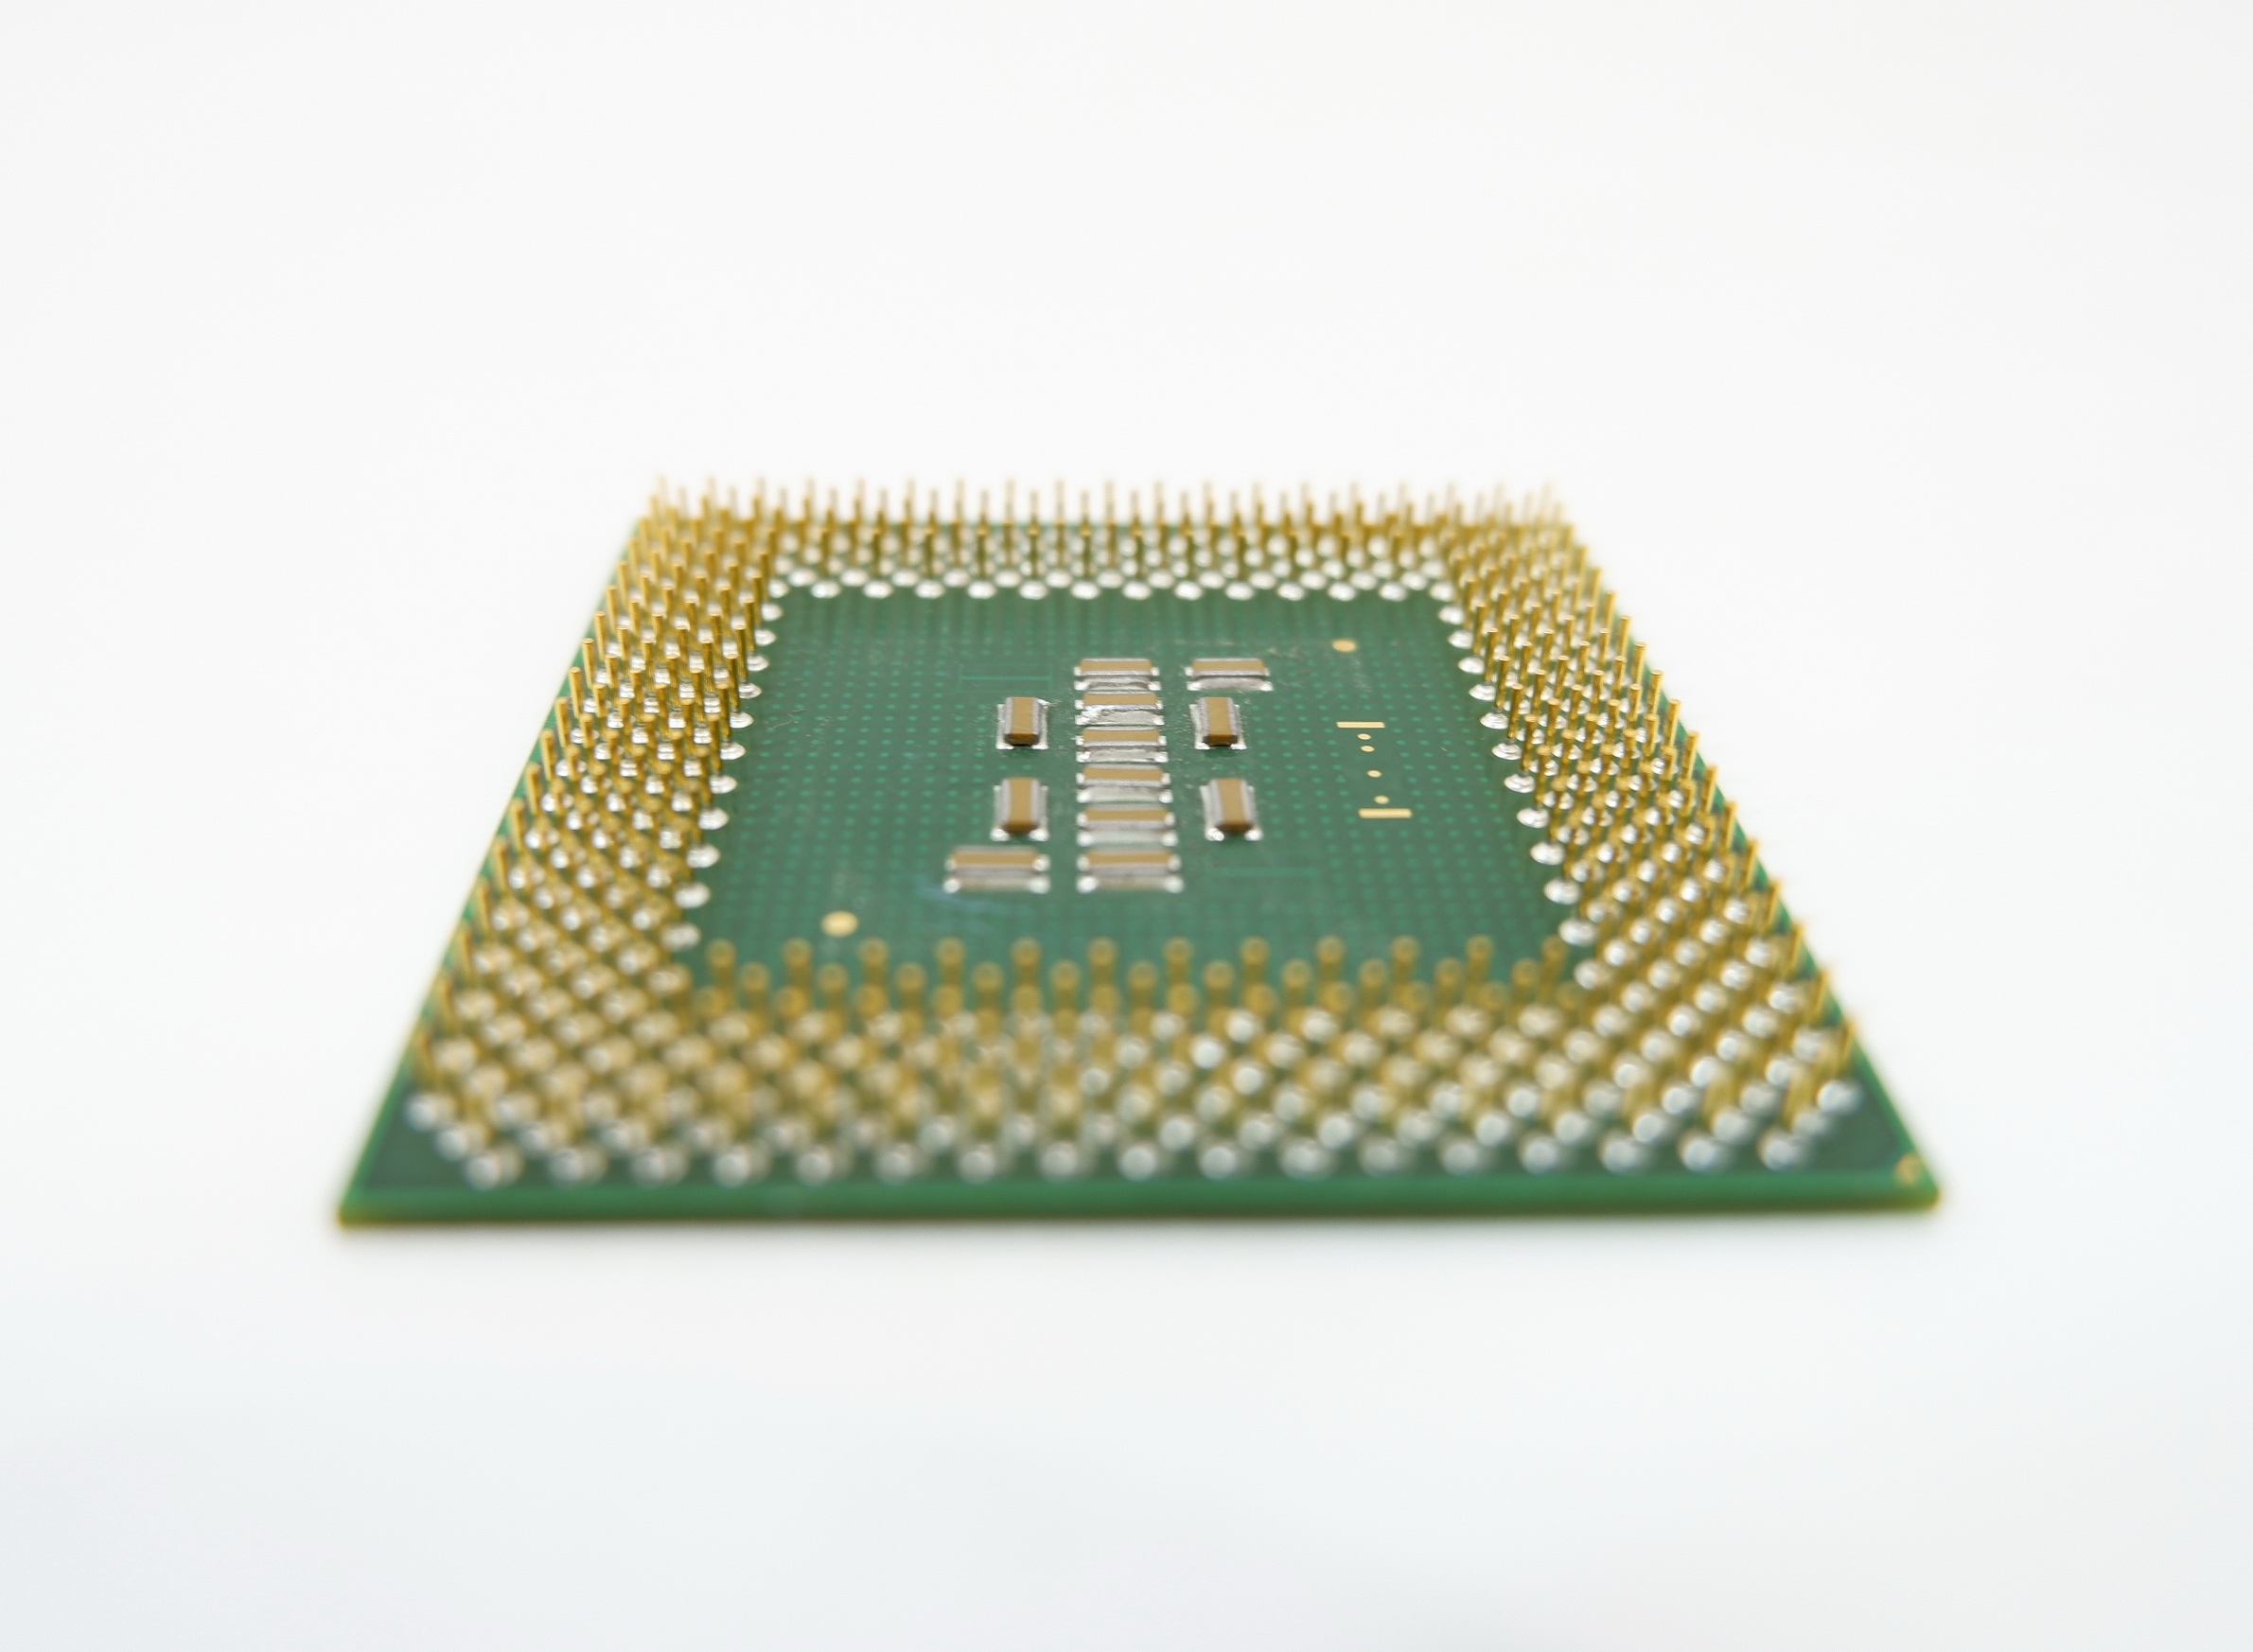 Процессор Socket 370 Intel Pentium III 1.1GHz - Pic n 287389